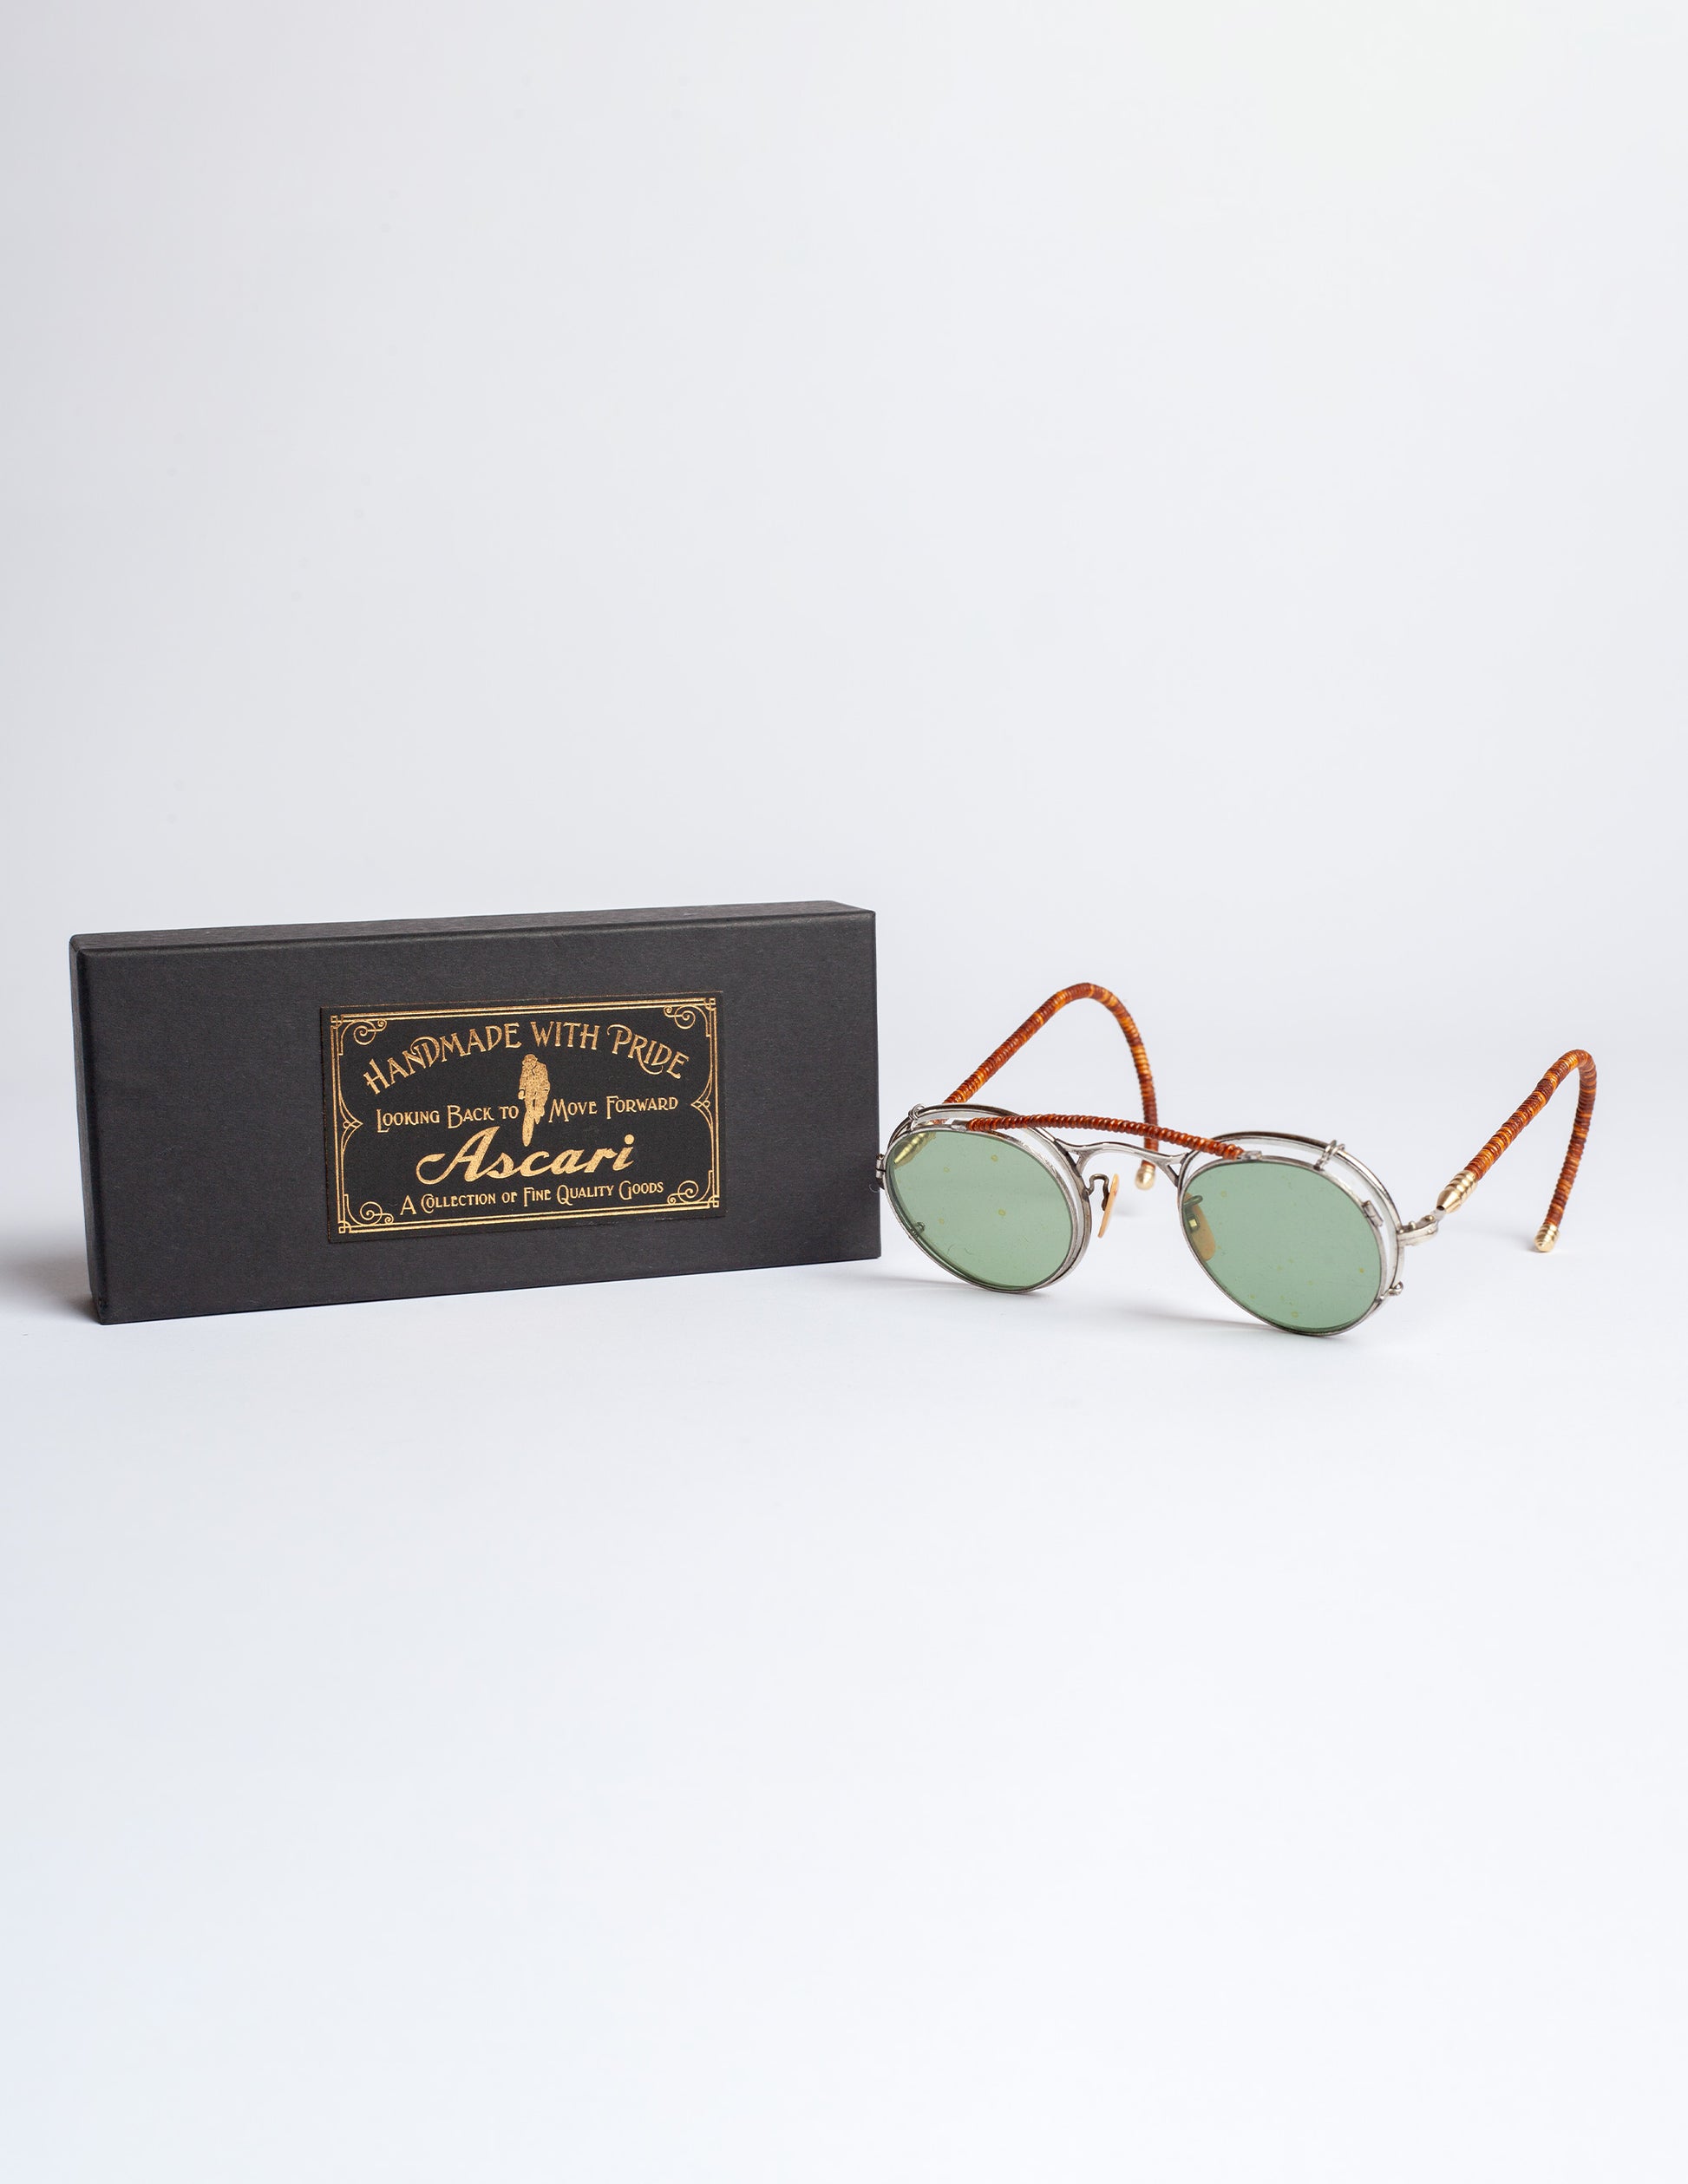 Rivay Helio Ascari 1940s WWII Air Corp Sunglasses